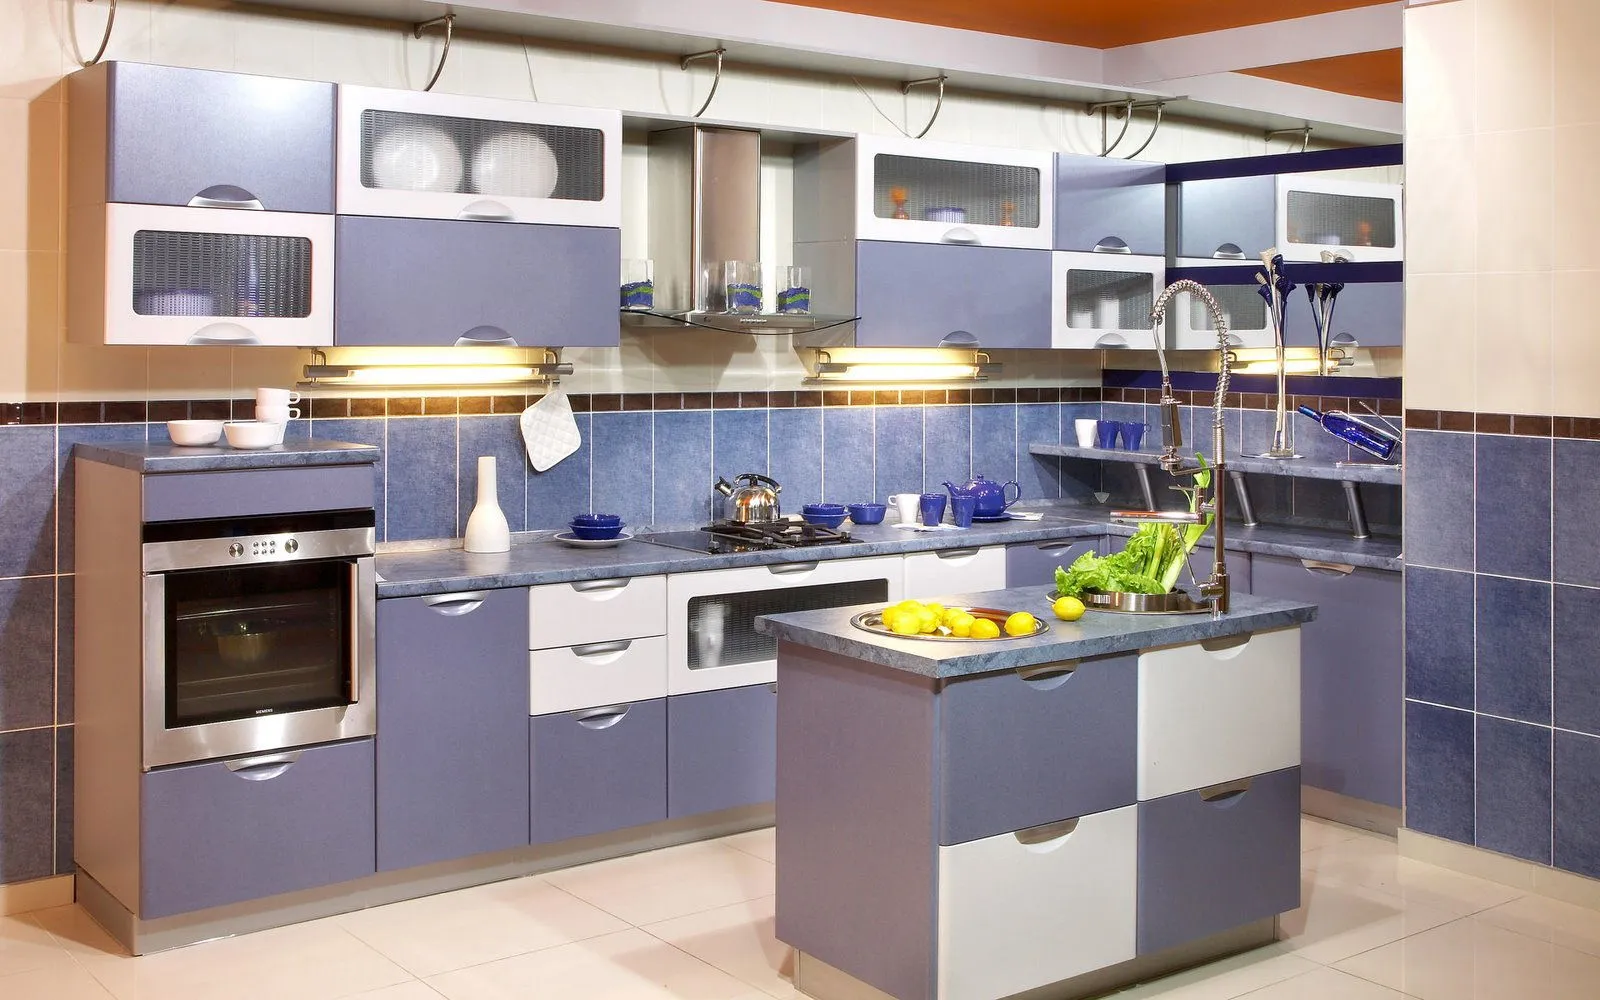 blue and purple kitchen accessories